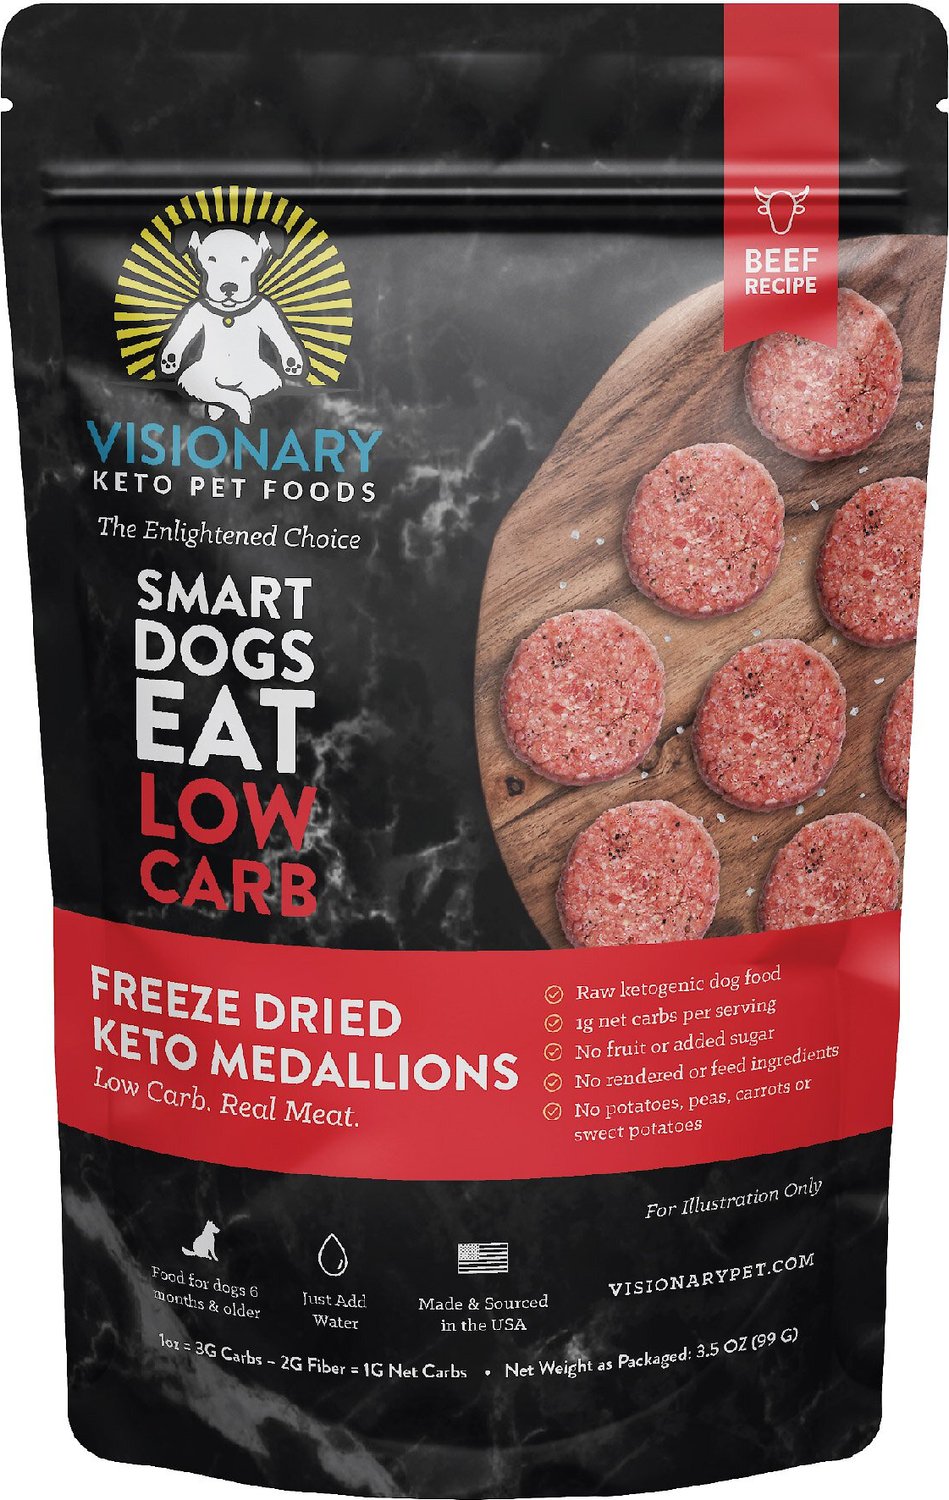 Visionary Pet Foods Keto Medallions Beef Recipe Grain-Free Freeze-Dried Dog Food